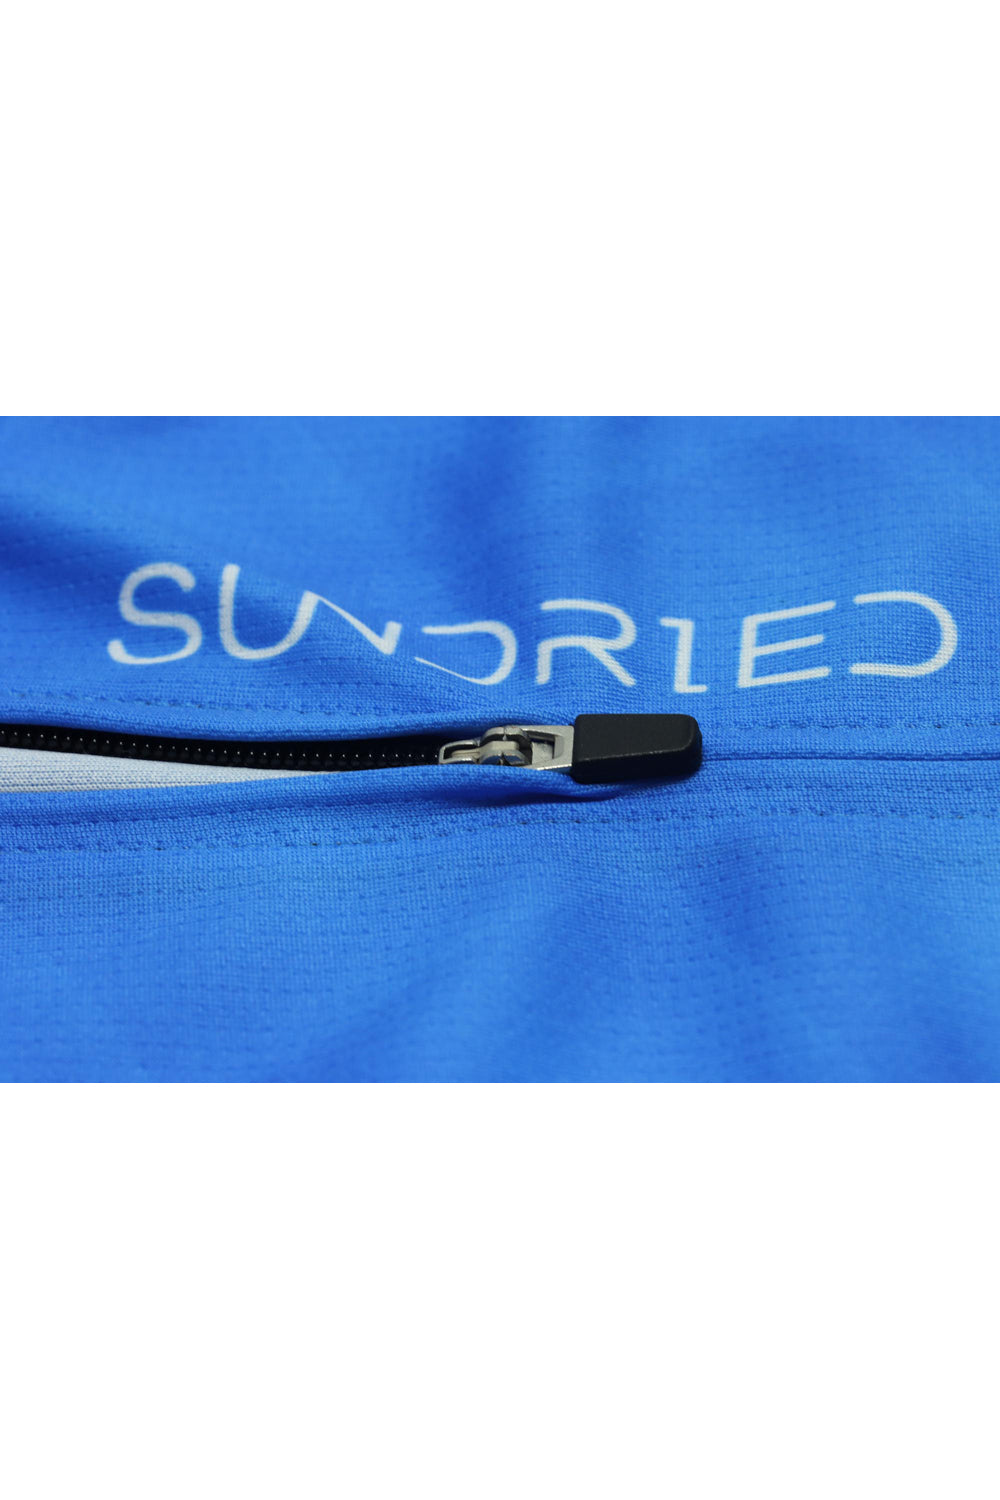 Sundried Plaid Men's Short Sleeve Training Jersey Short Sleeve Jersey Activewear